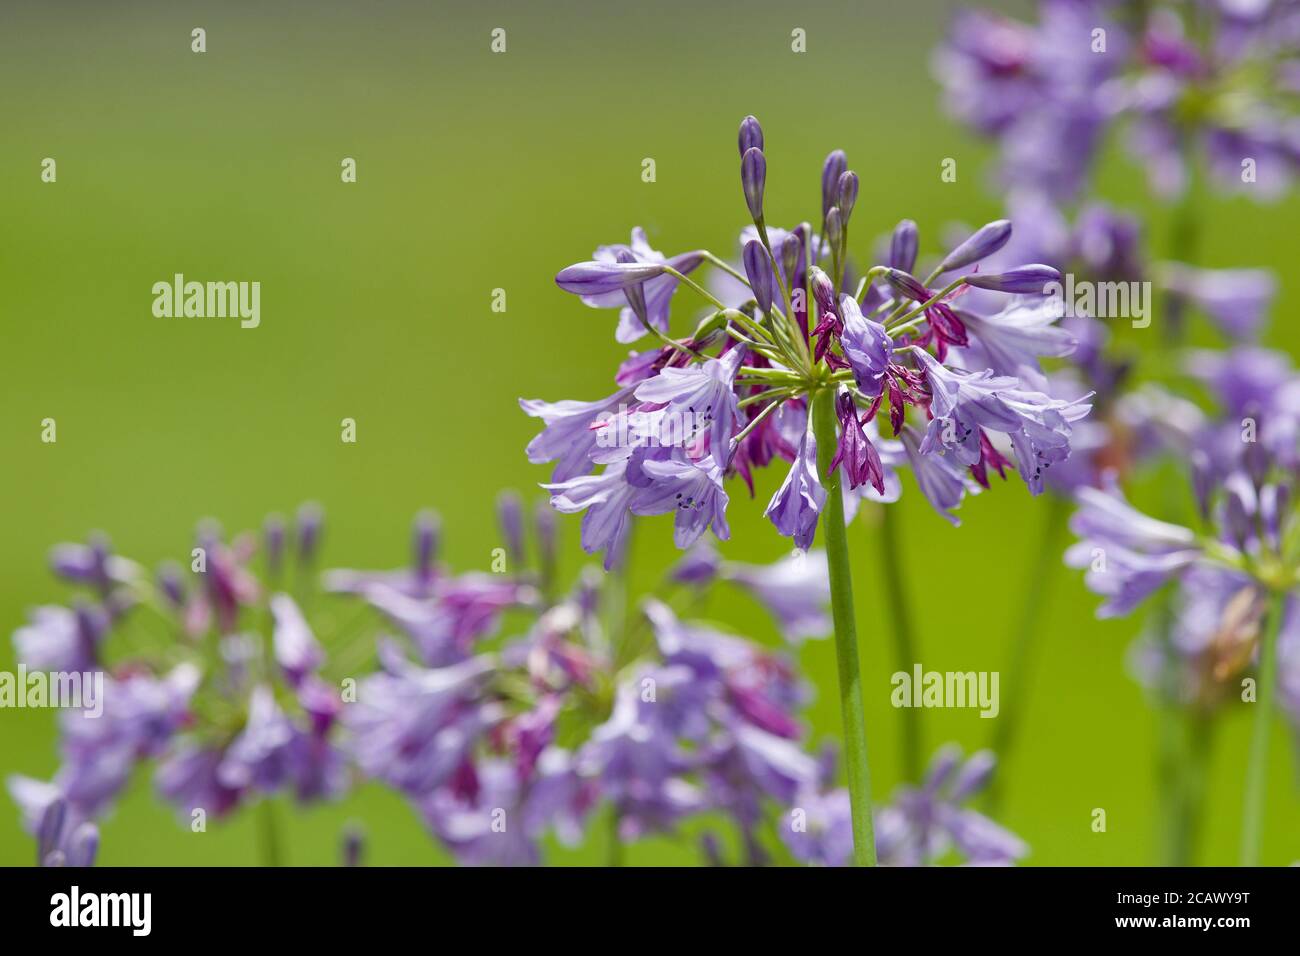 Beautiful display of Agapanthus flowers Stock Photo